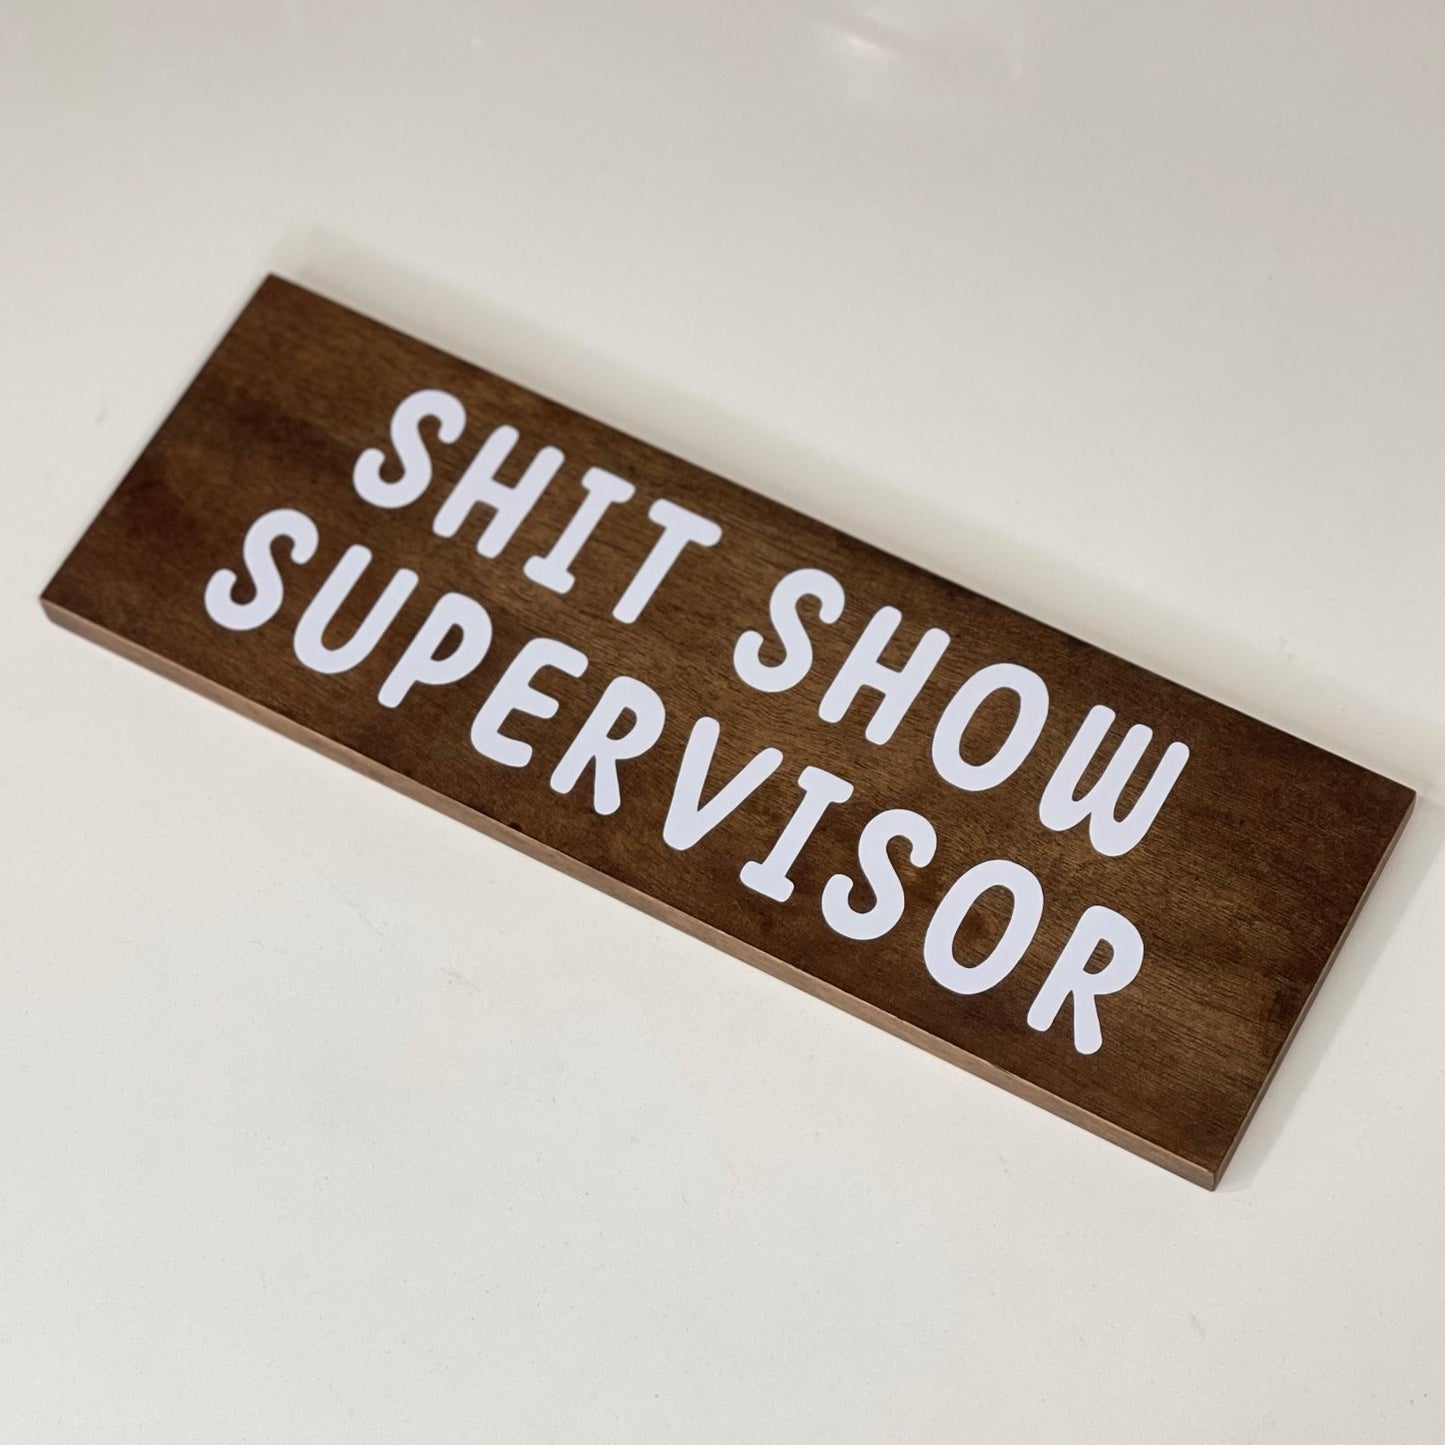 Shit Show Supervisor - Funny Sign - Wall Decor - Bar Wall Art - Wooden Sign